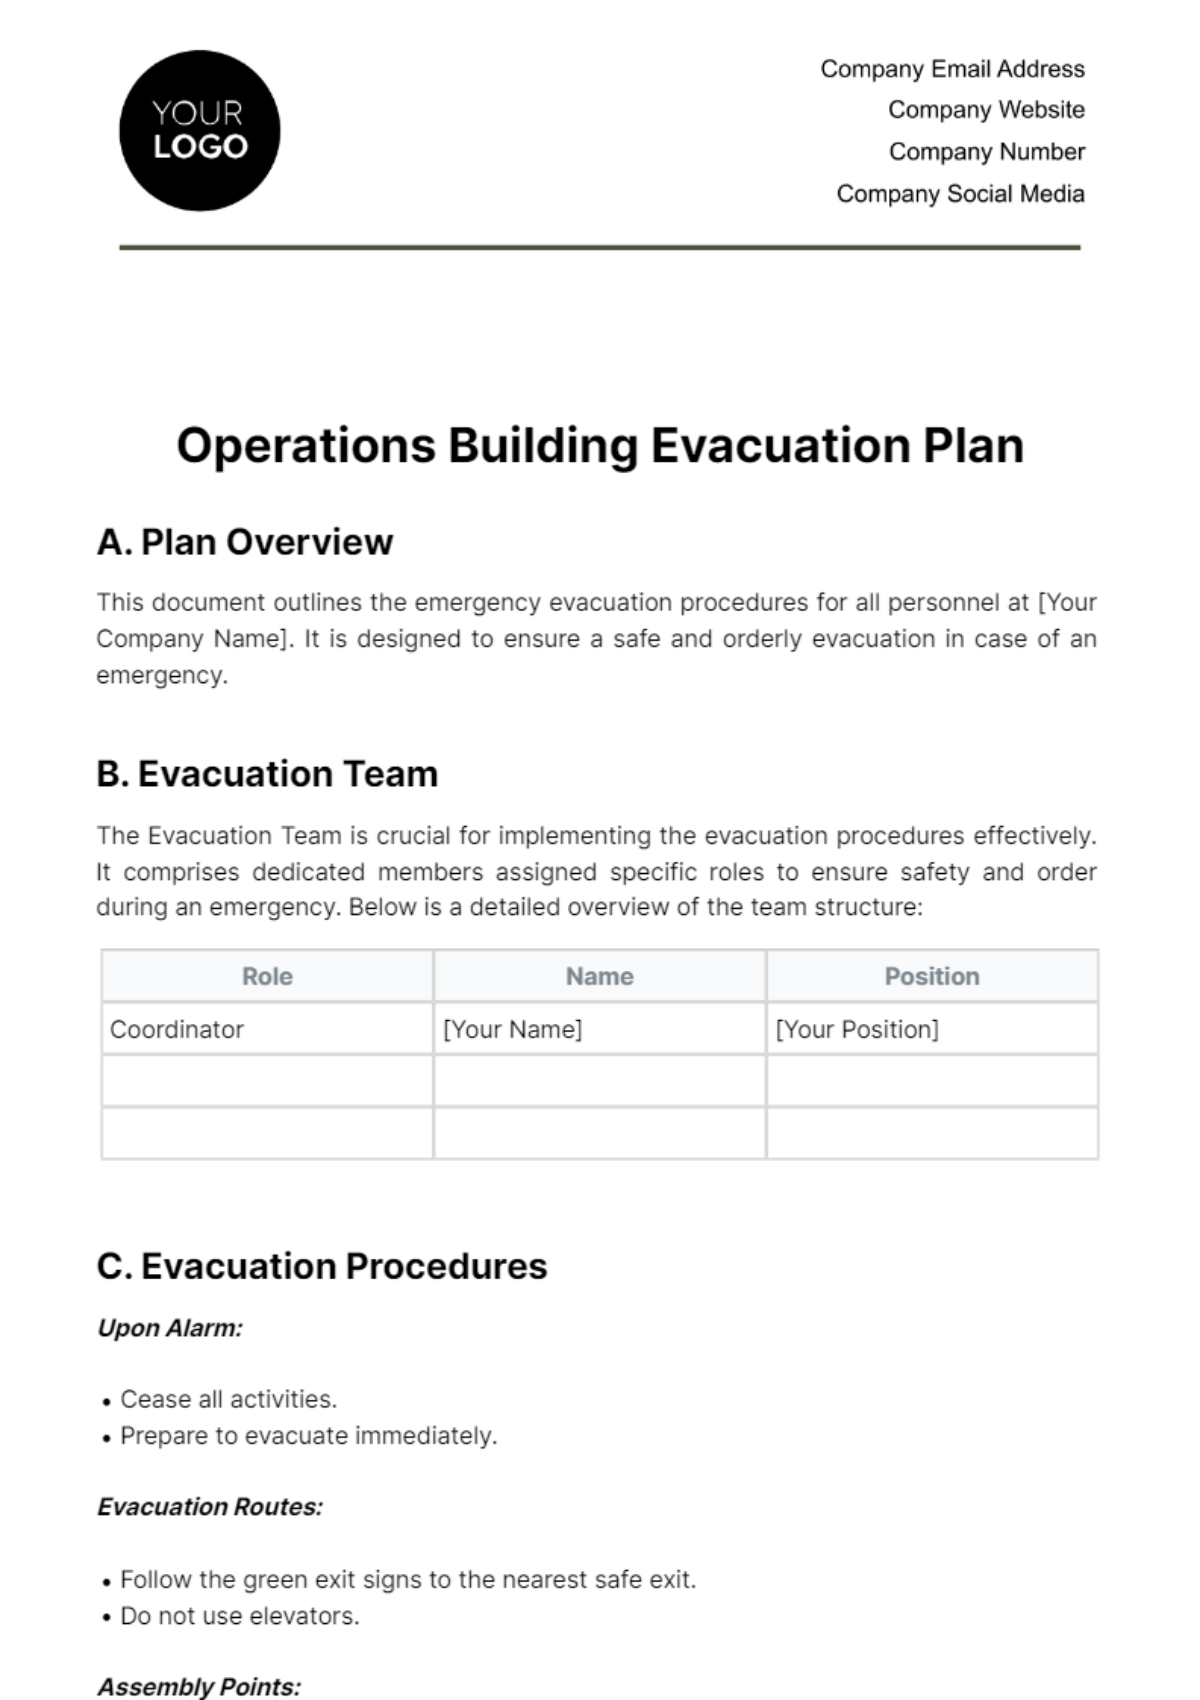 Operations Building Evacuation Plan Template